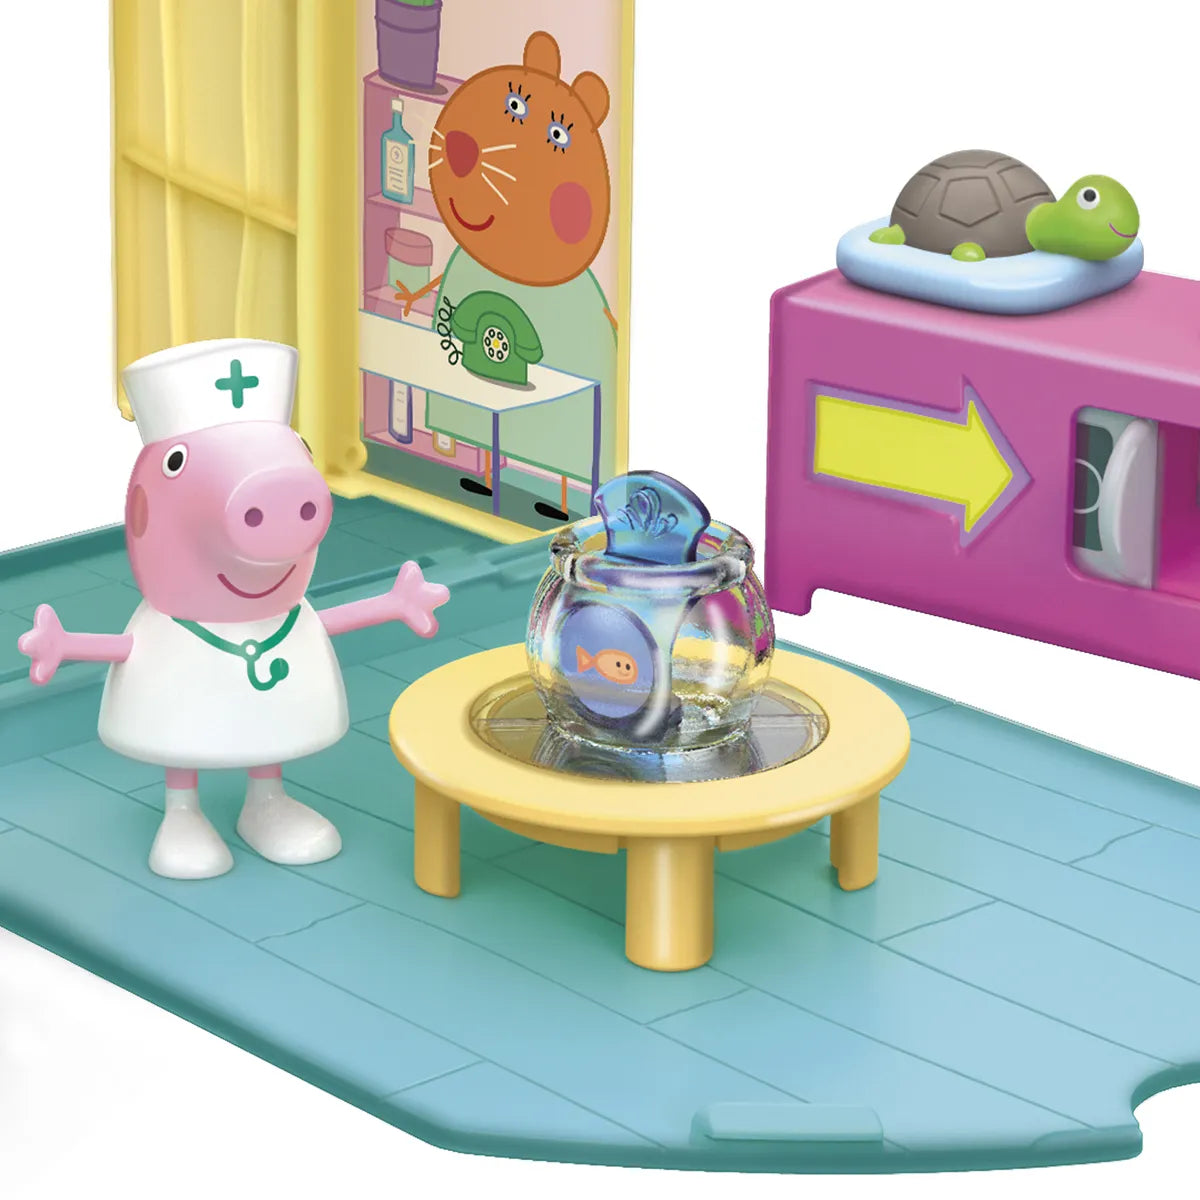 Peppa Pig - Peppa Visits the Vet Playset